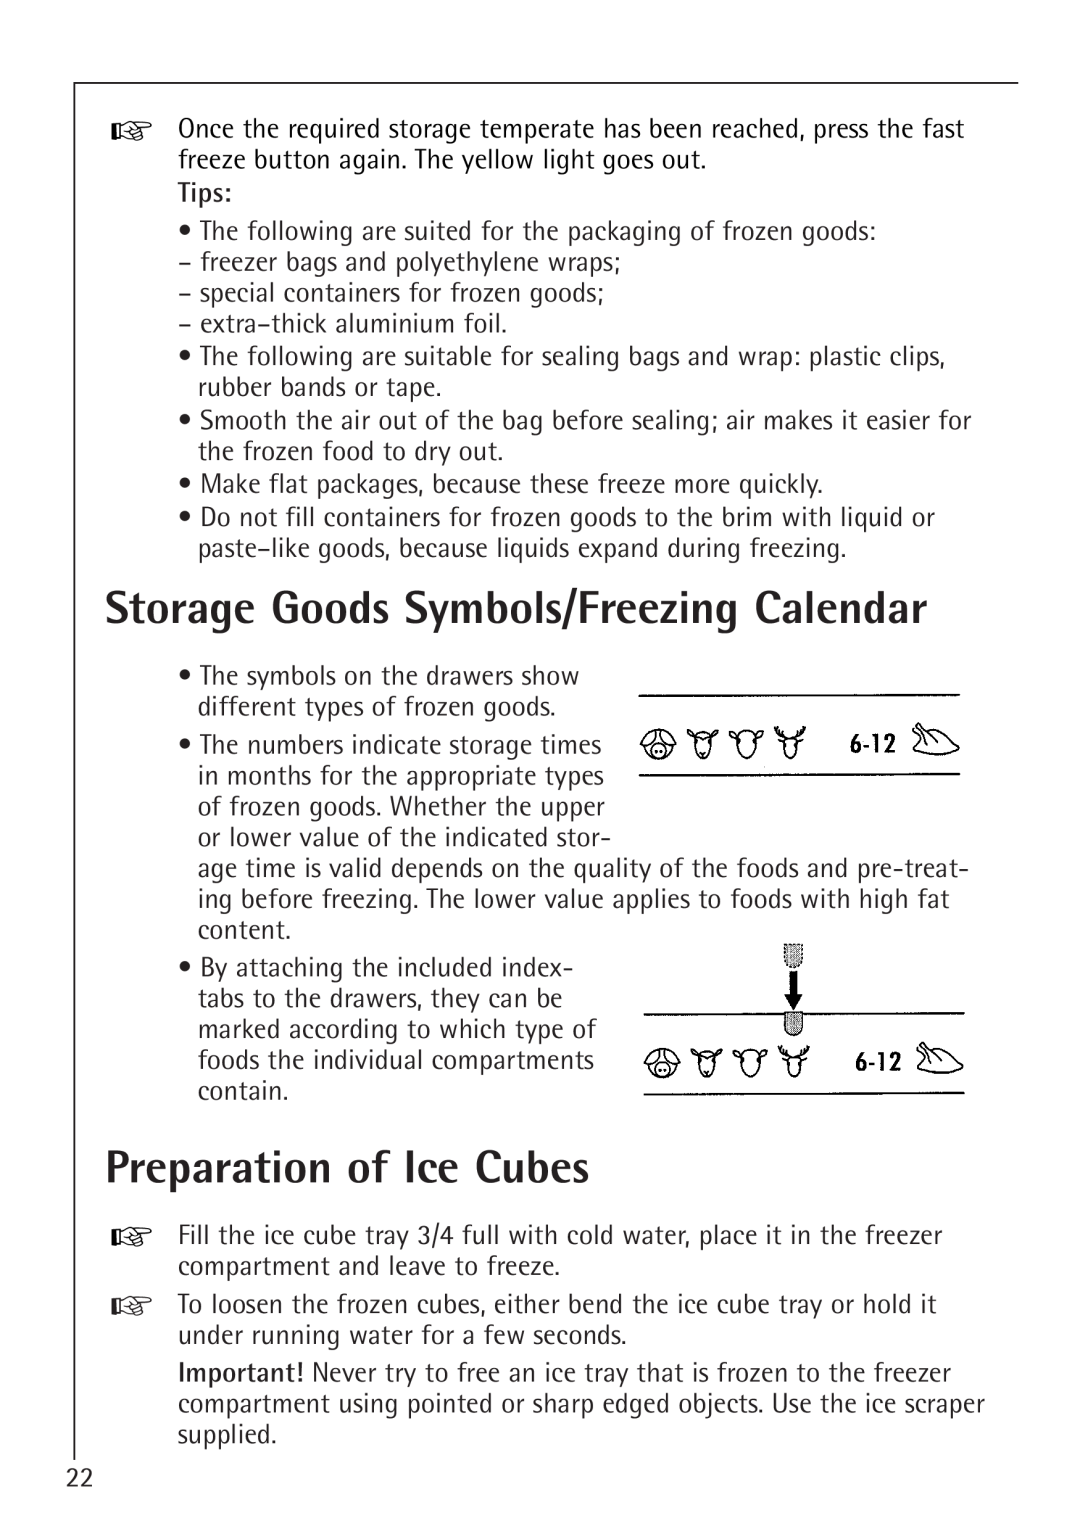 Electrolux 66050i installation instructions Storage Goods Symbols/Freezing Calendar, Preparation of Ice Cubes, Tips 